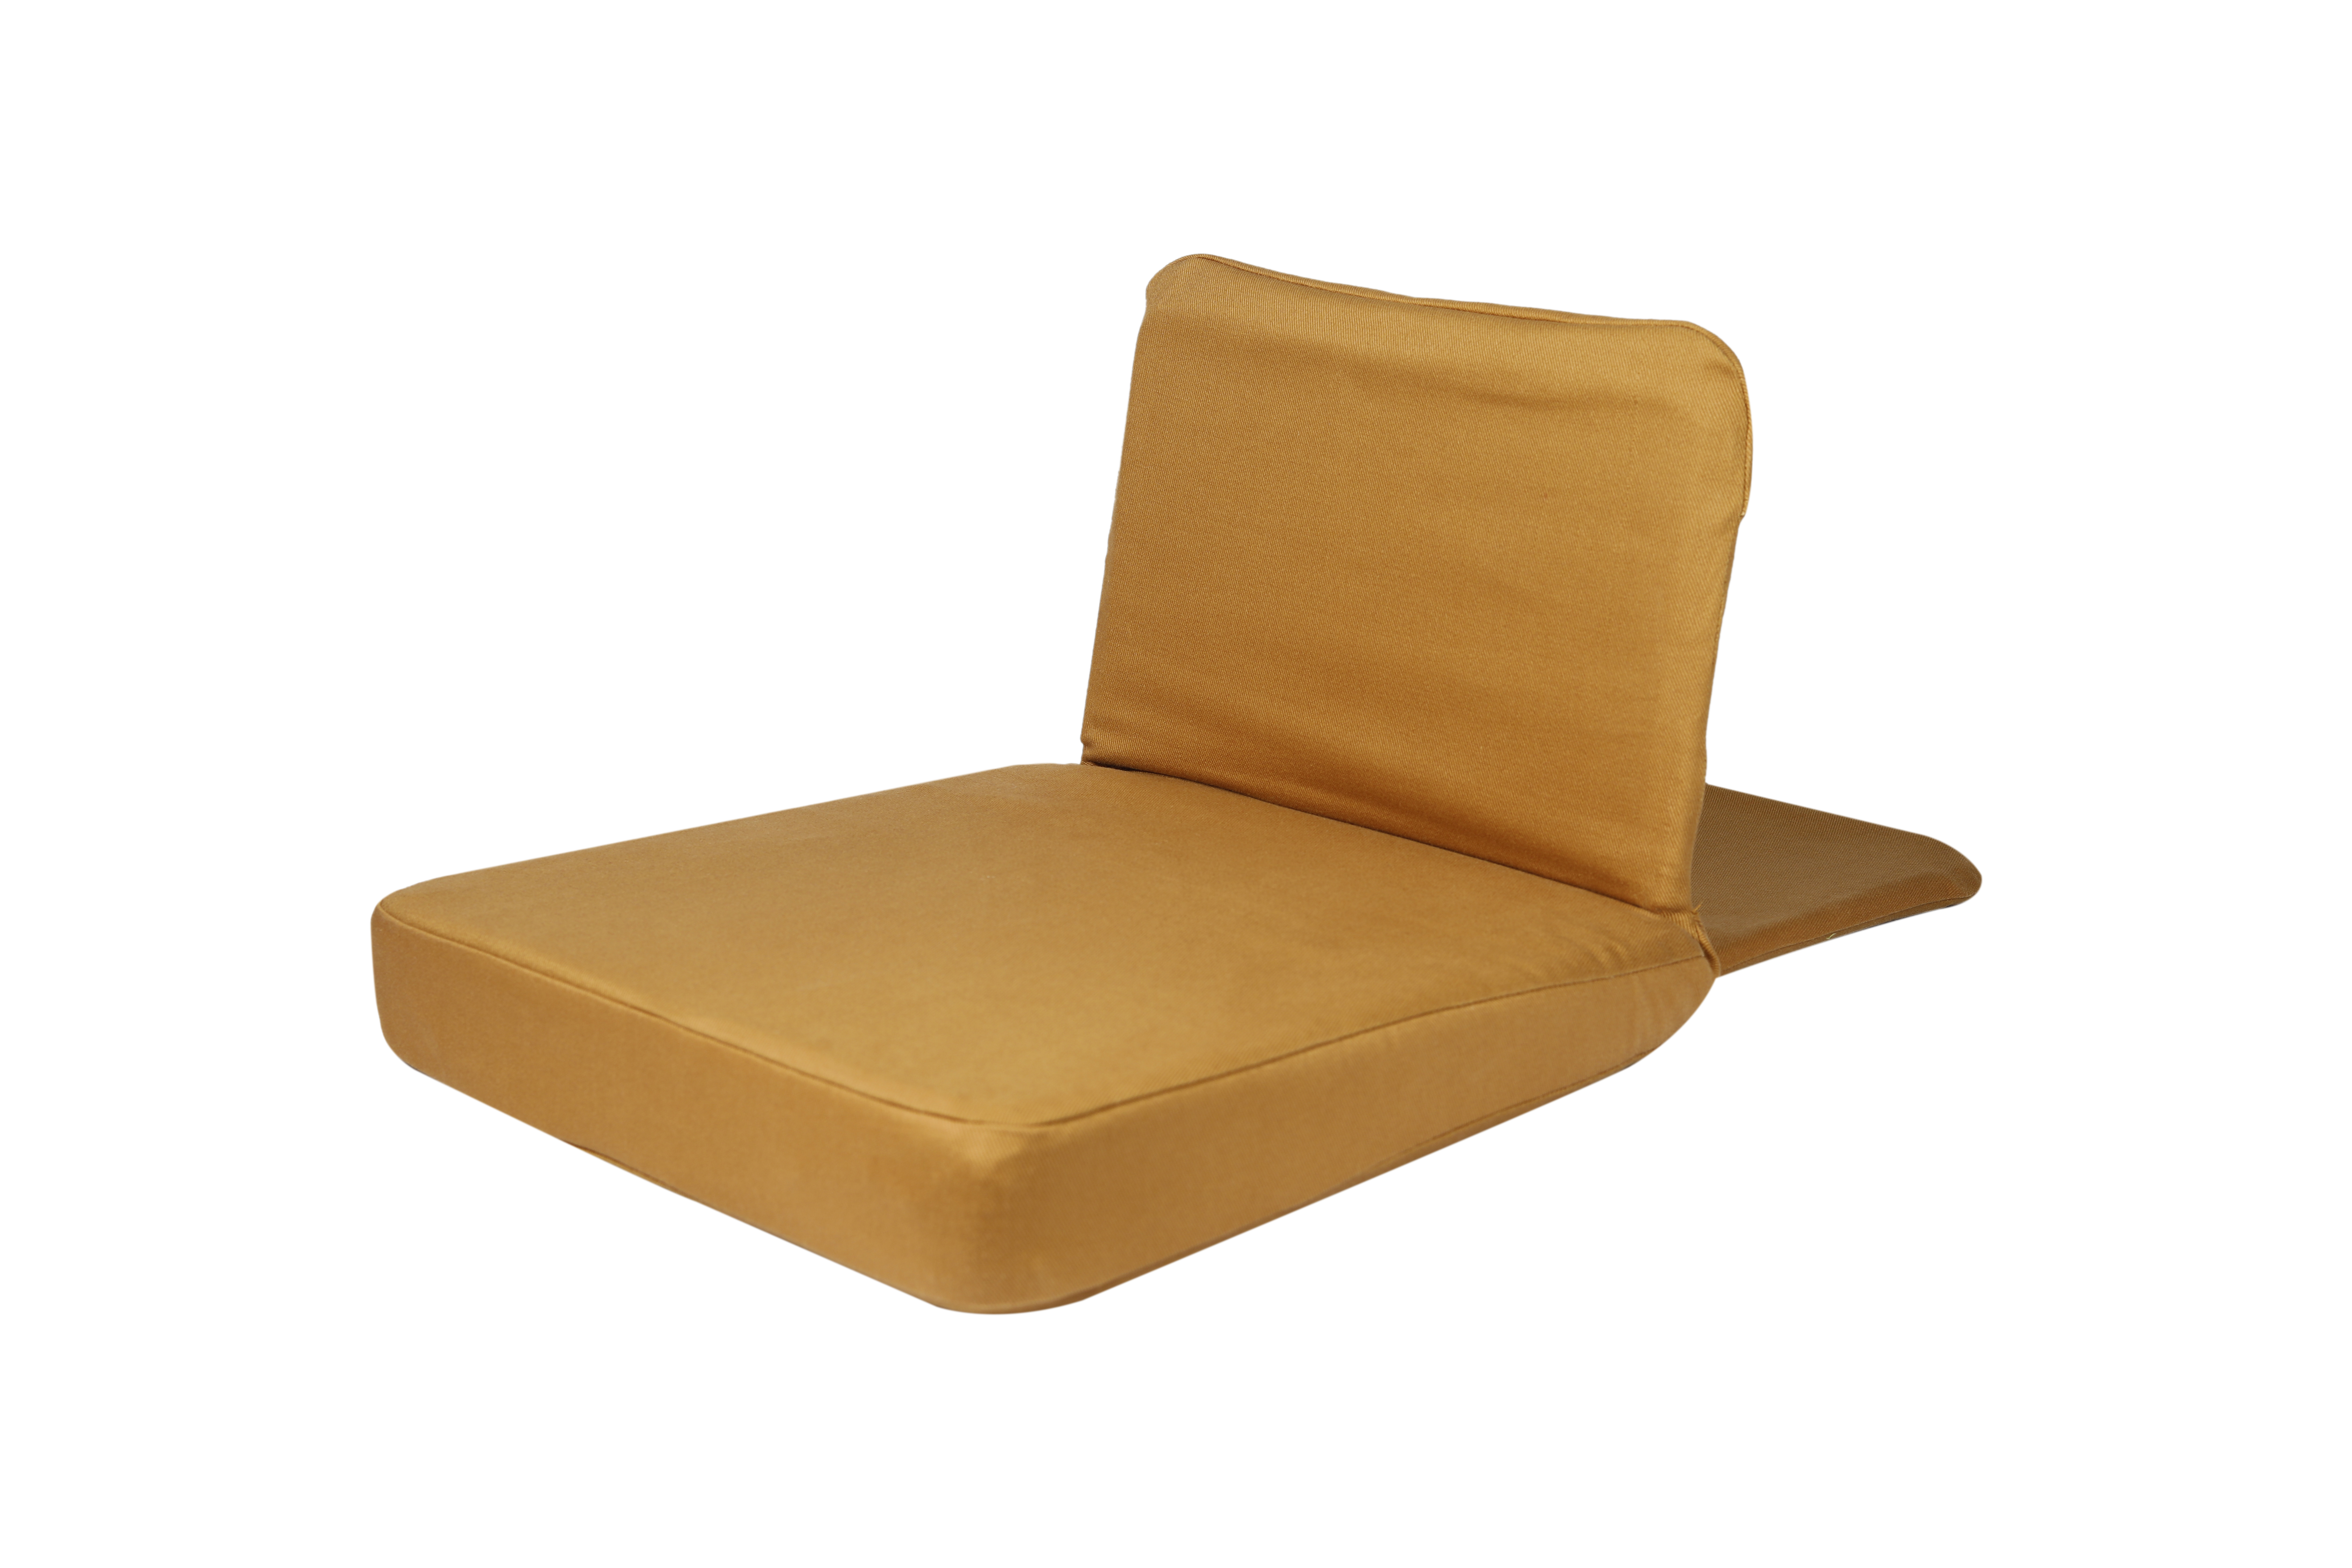 Moksh Zen Petite Back Meditation Chair Golden Mustard